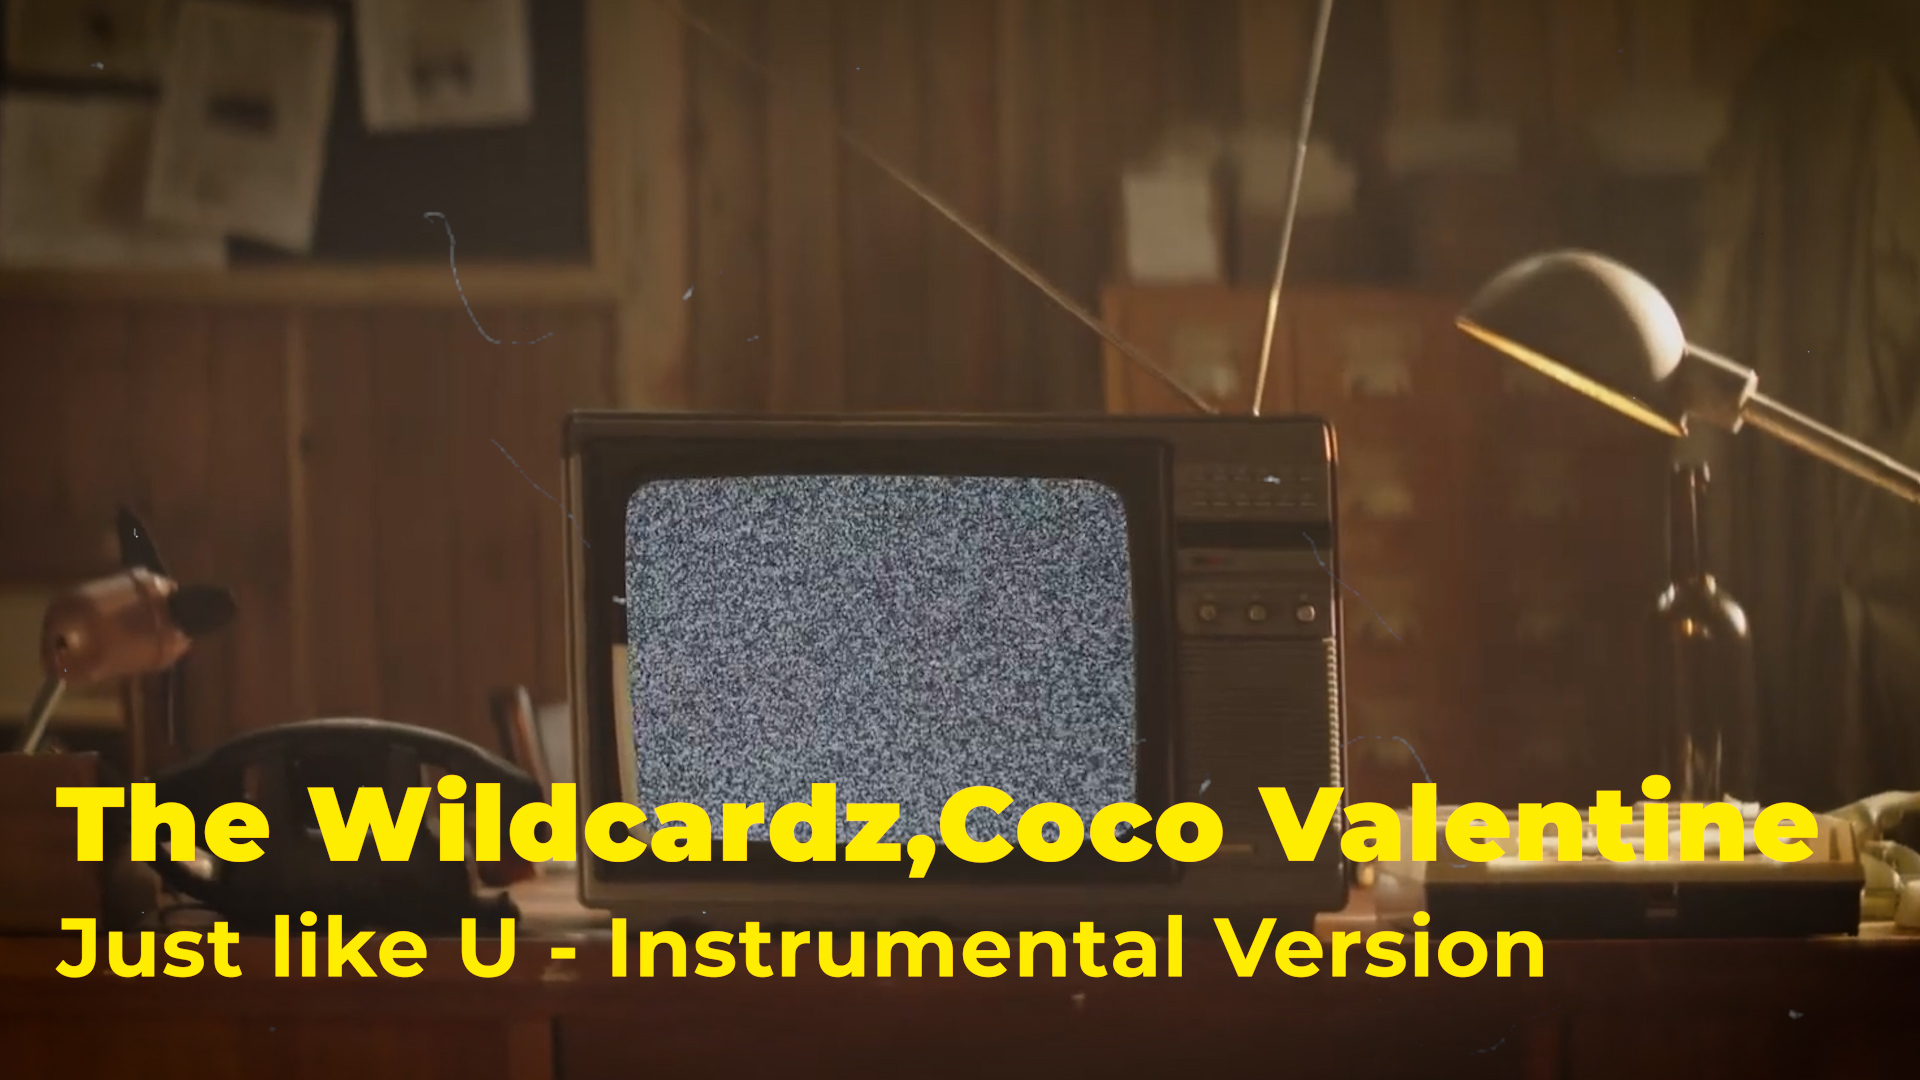 The Wildcardz,Coco Valentine - Just like U - Instrumental Version (Pop)
Музыка без авторских прав